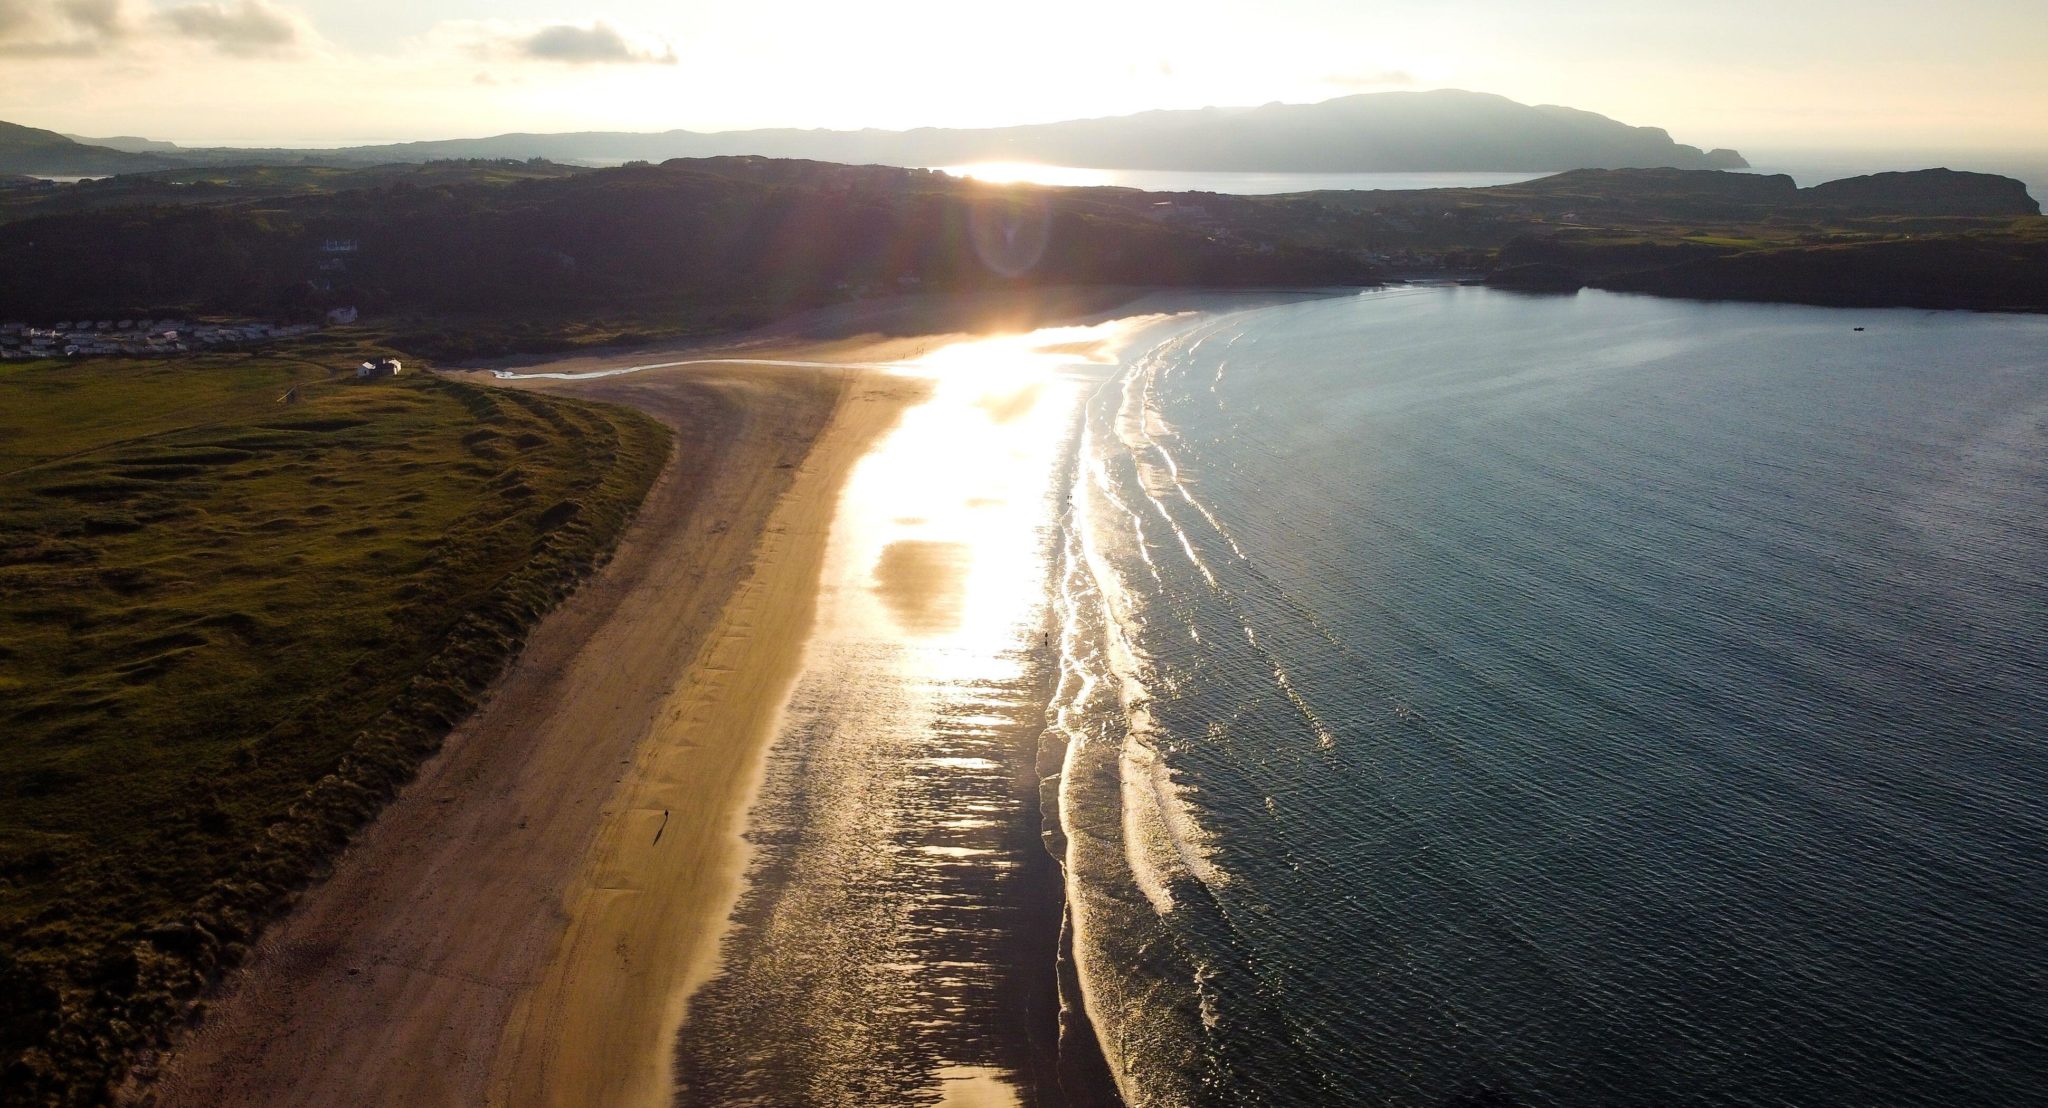 Marble Hill Beach, County Donegal, Ireland. Image: Gavin Maxwell / Alamy Stock Photo